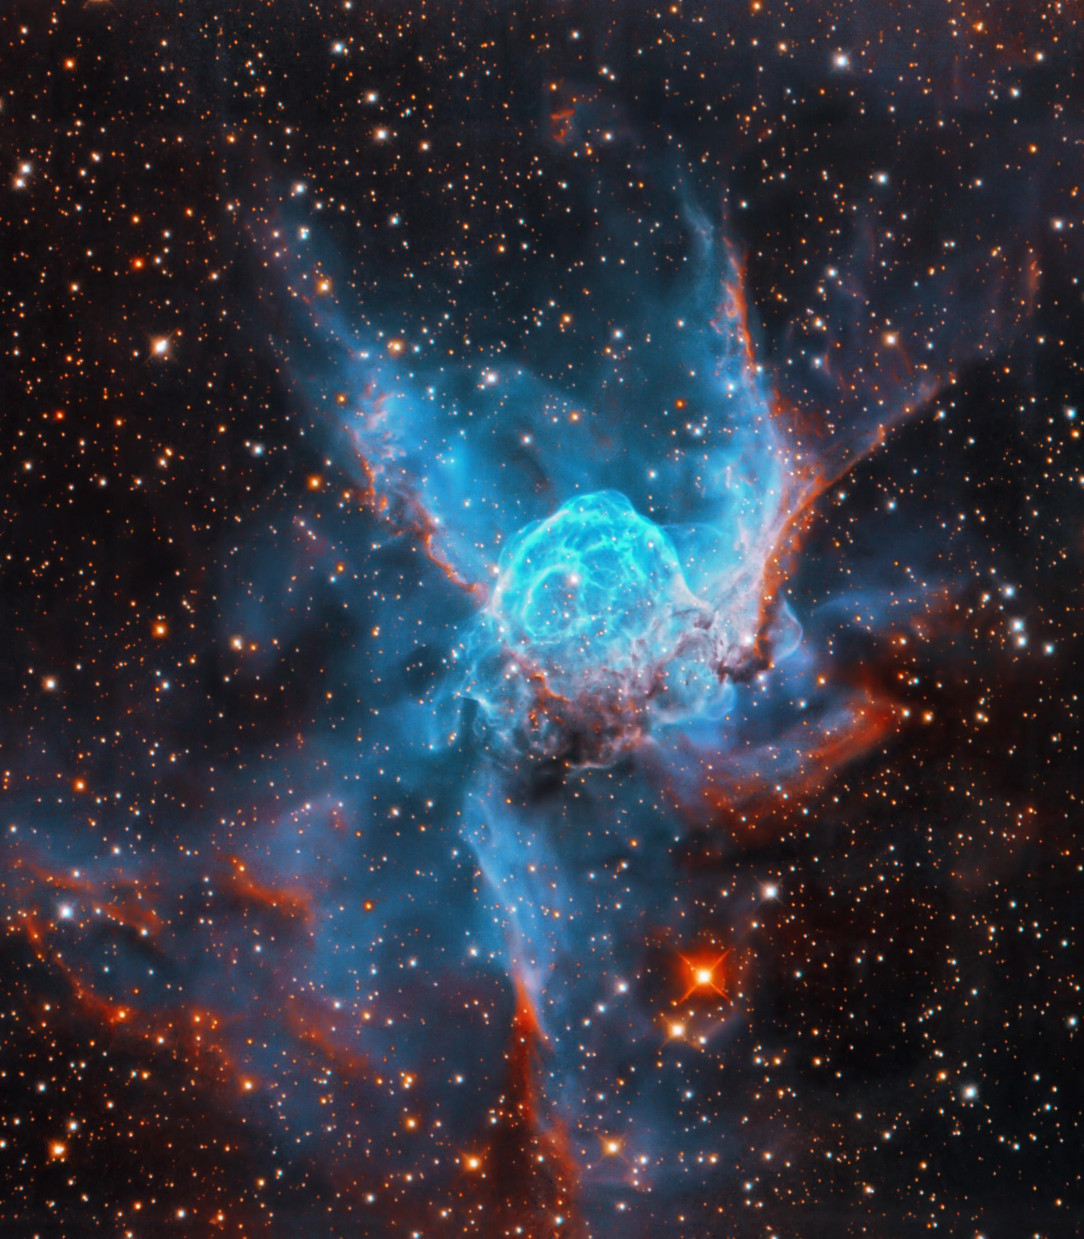 Thor&#039;s Helmet Nebula shot for 29hrs under dark skies